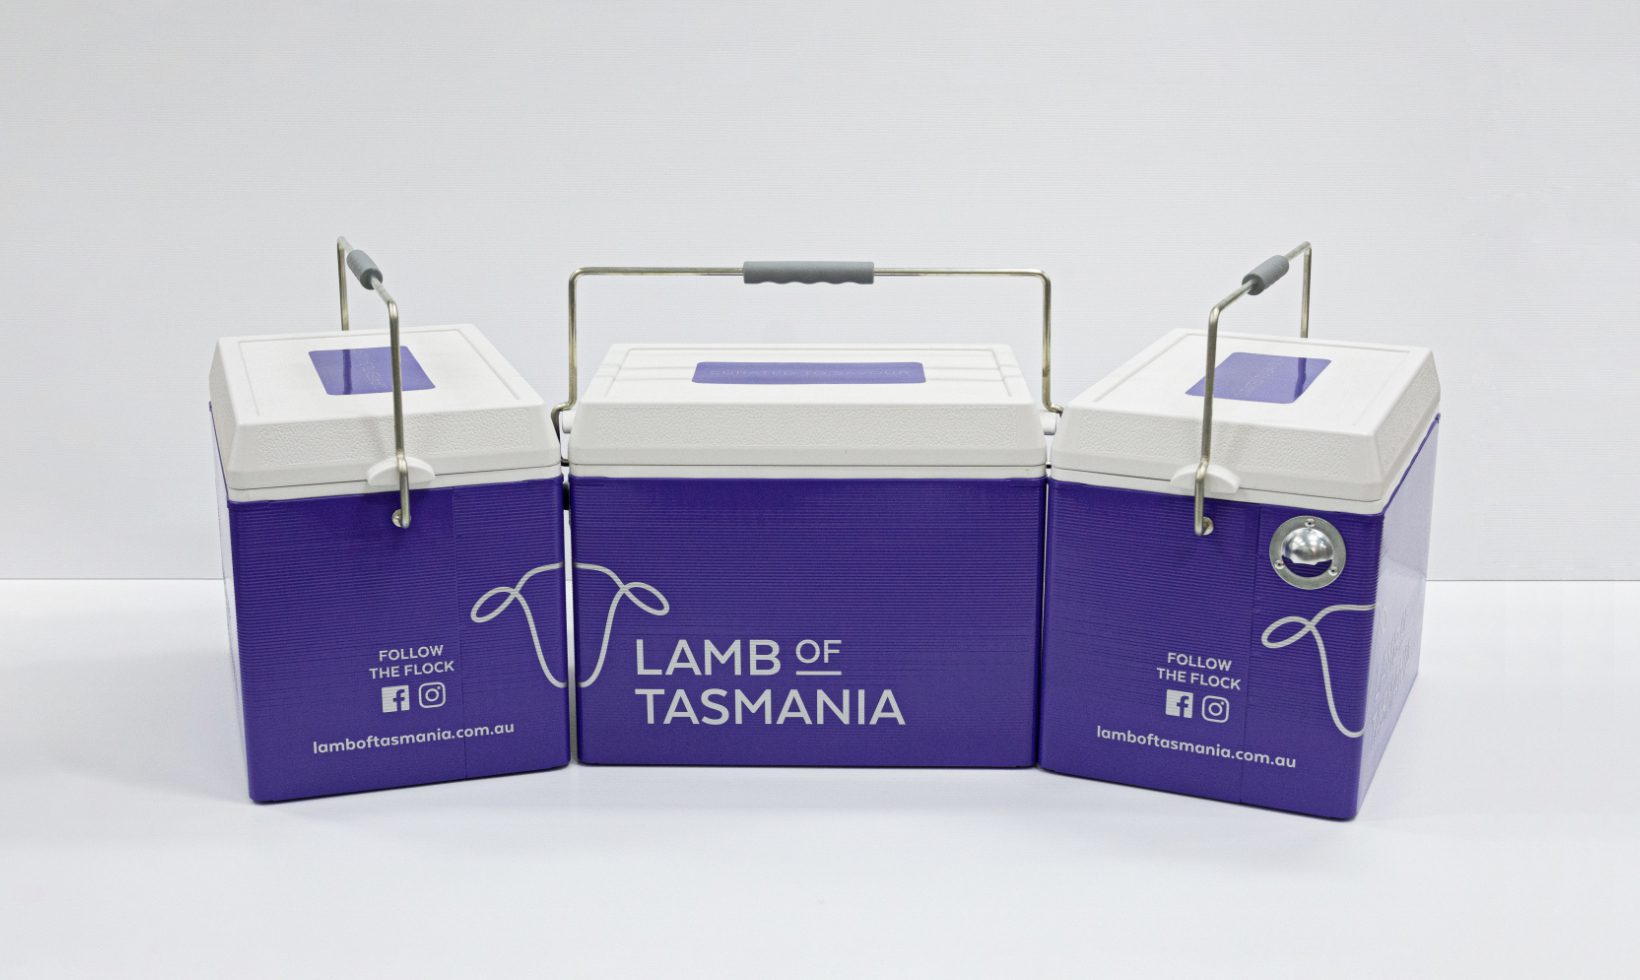 Lamb of Tasmania